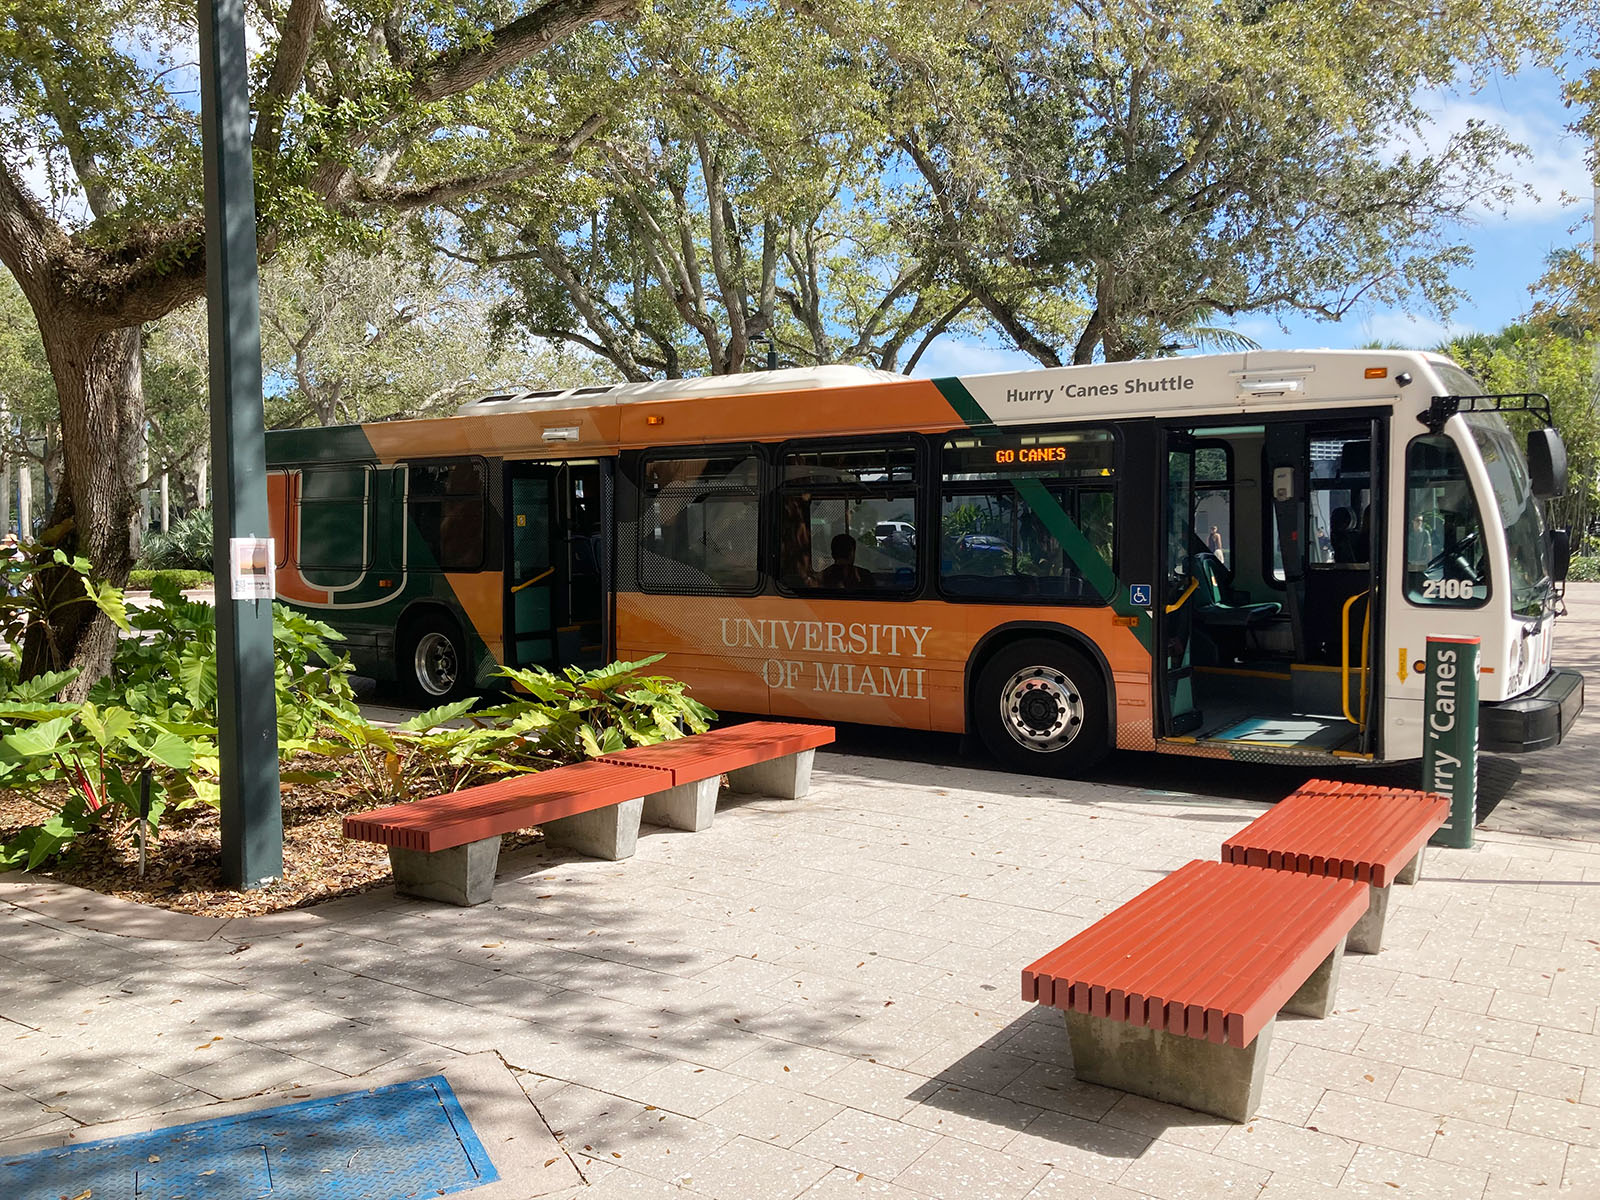 A U Miami shuttle bus